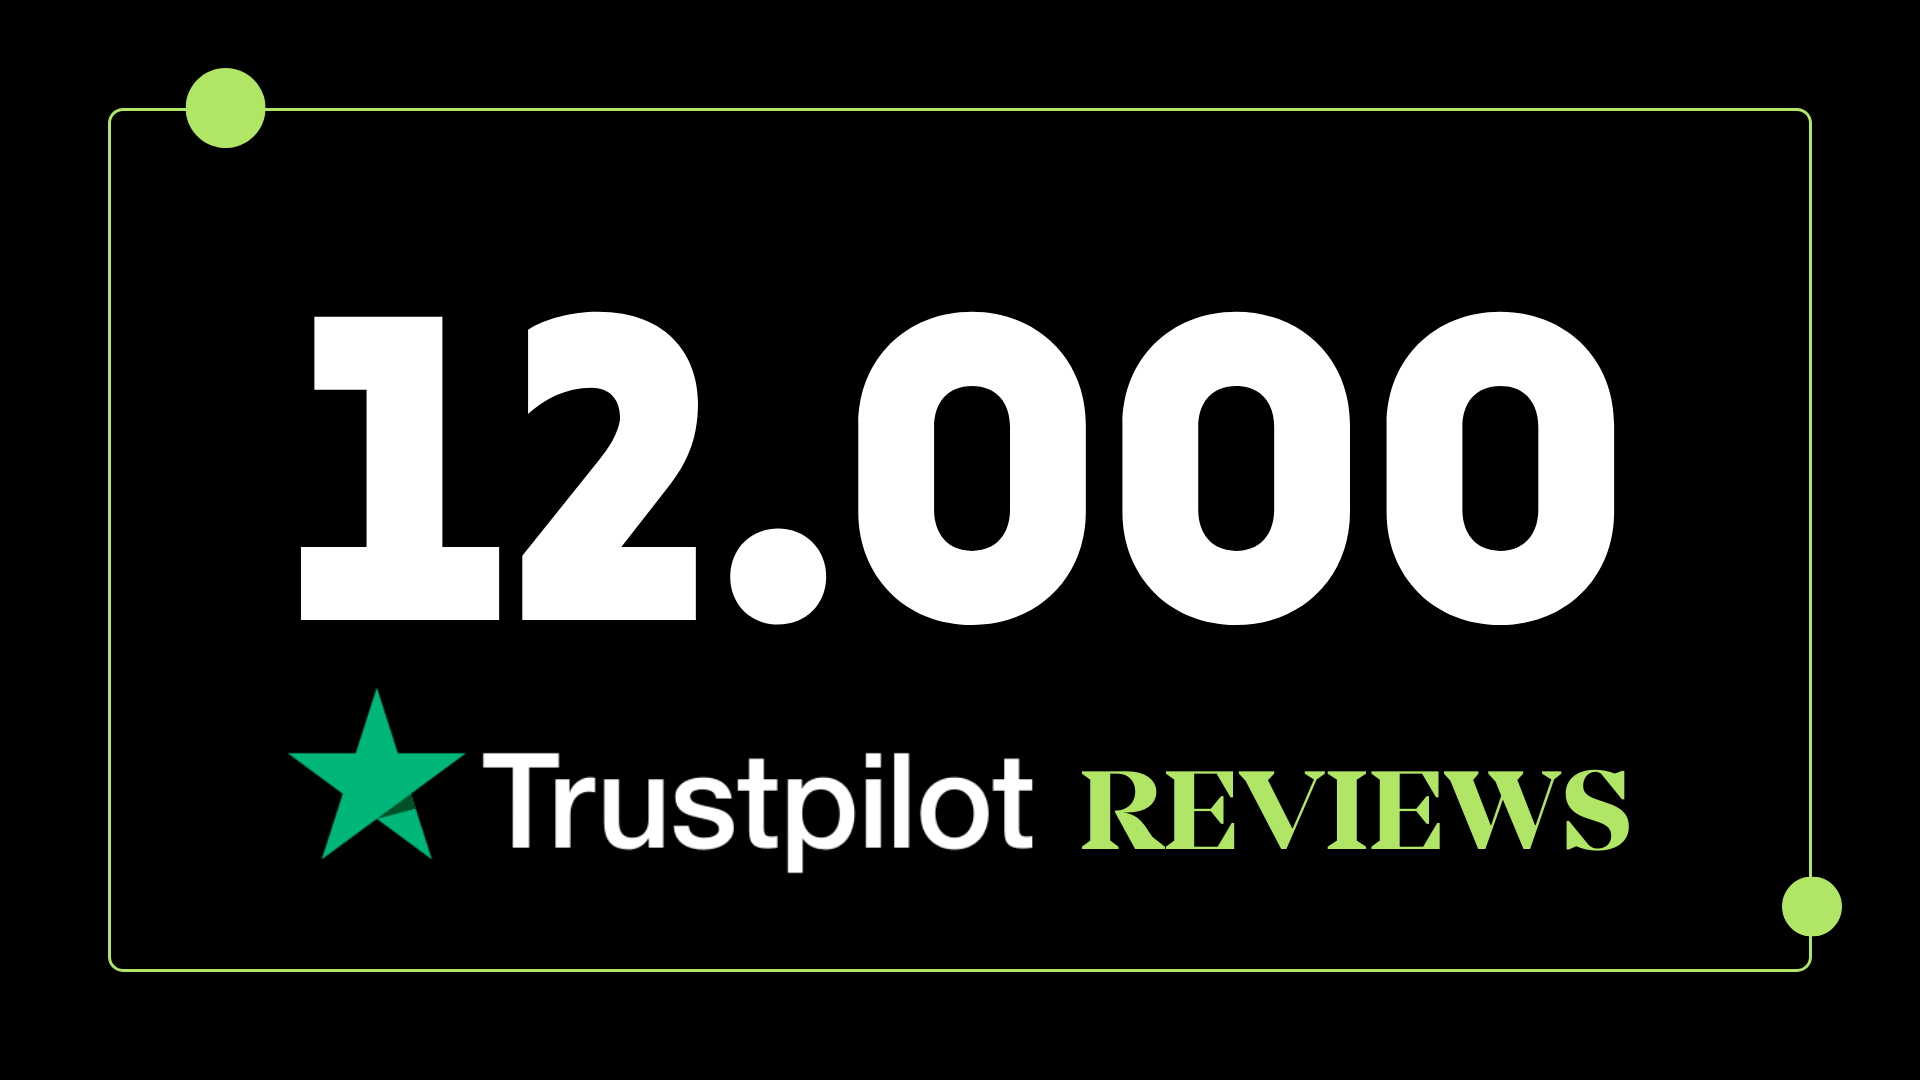 12,000 Trustpilot Reviews